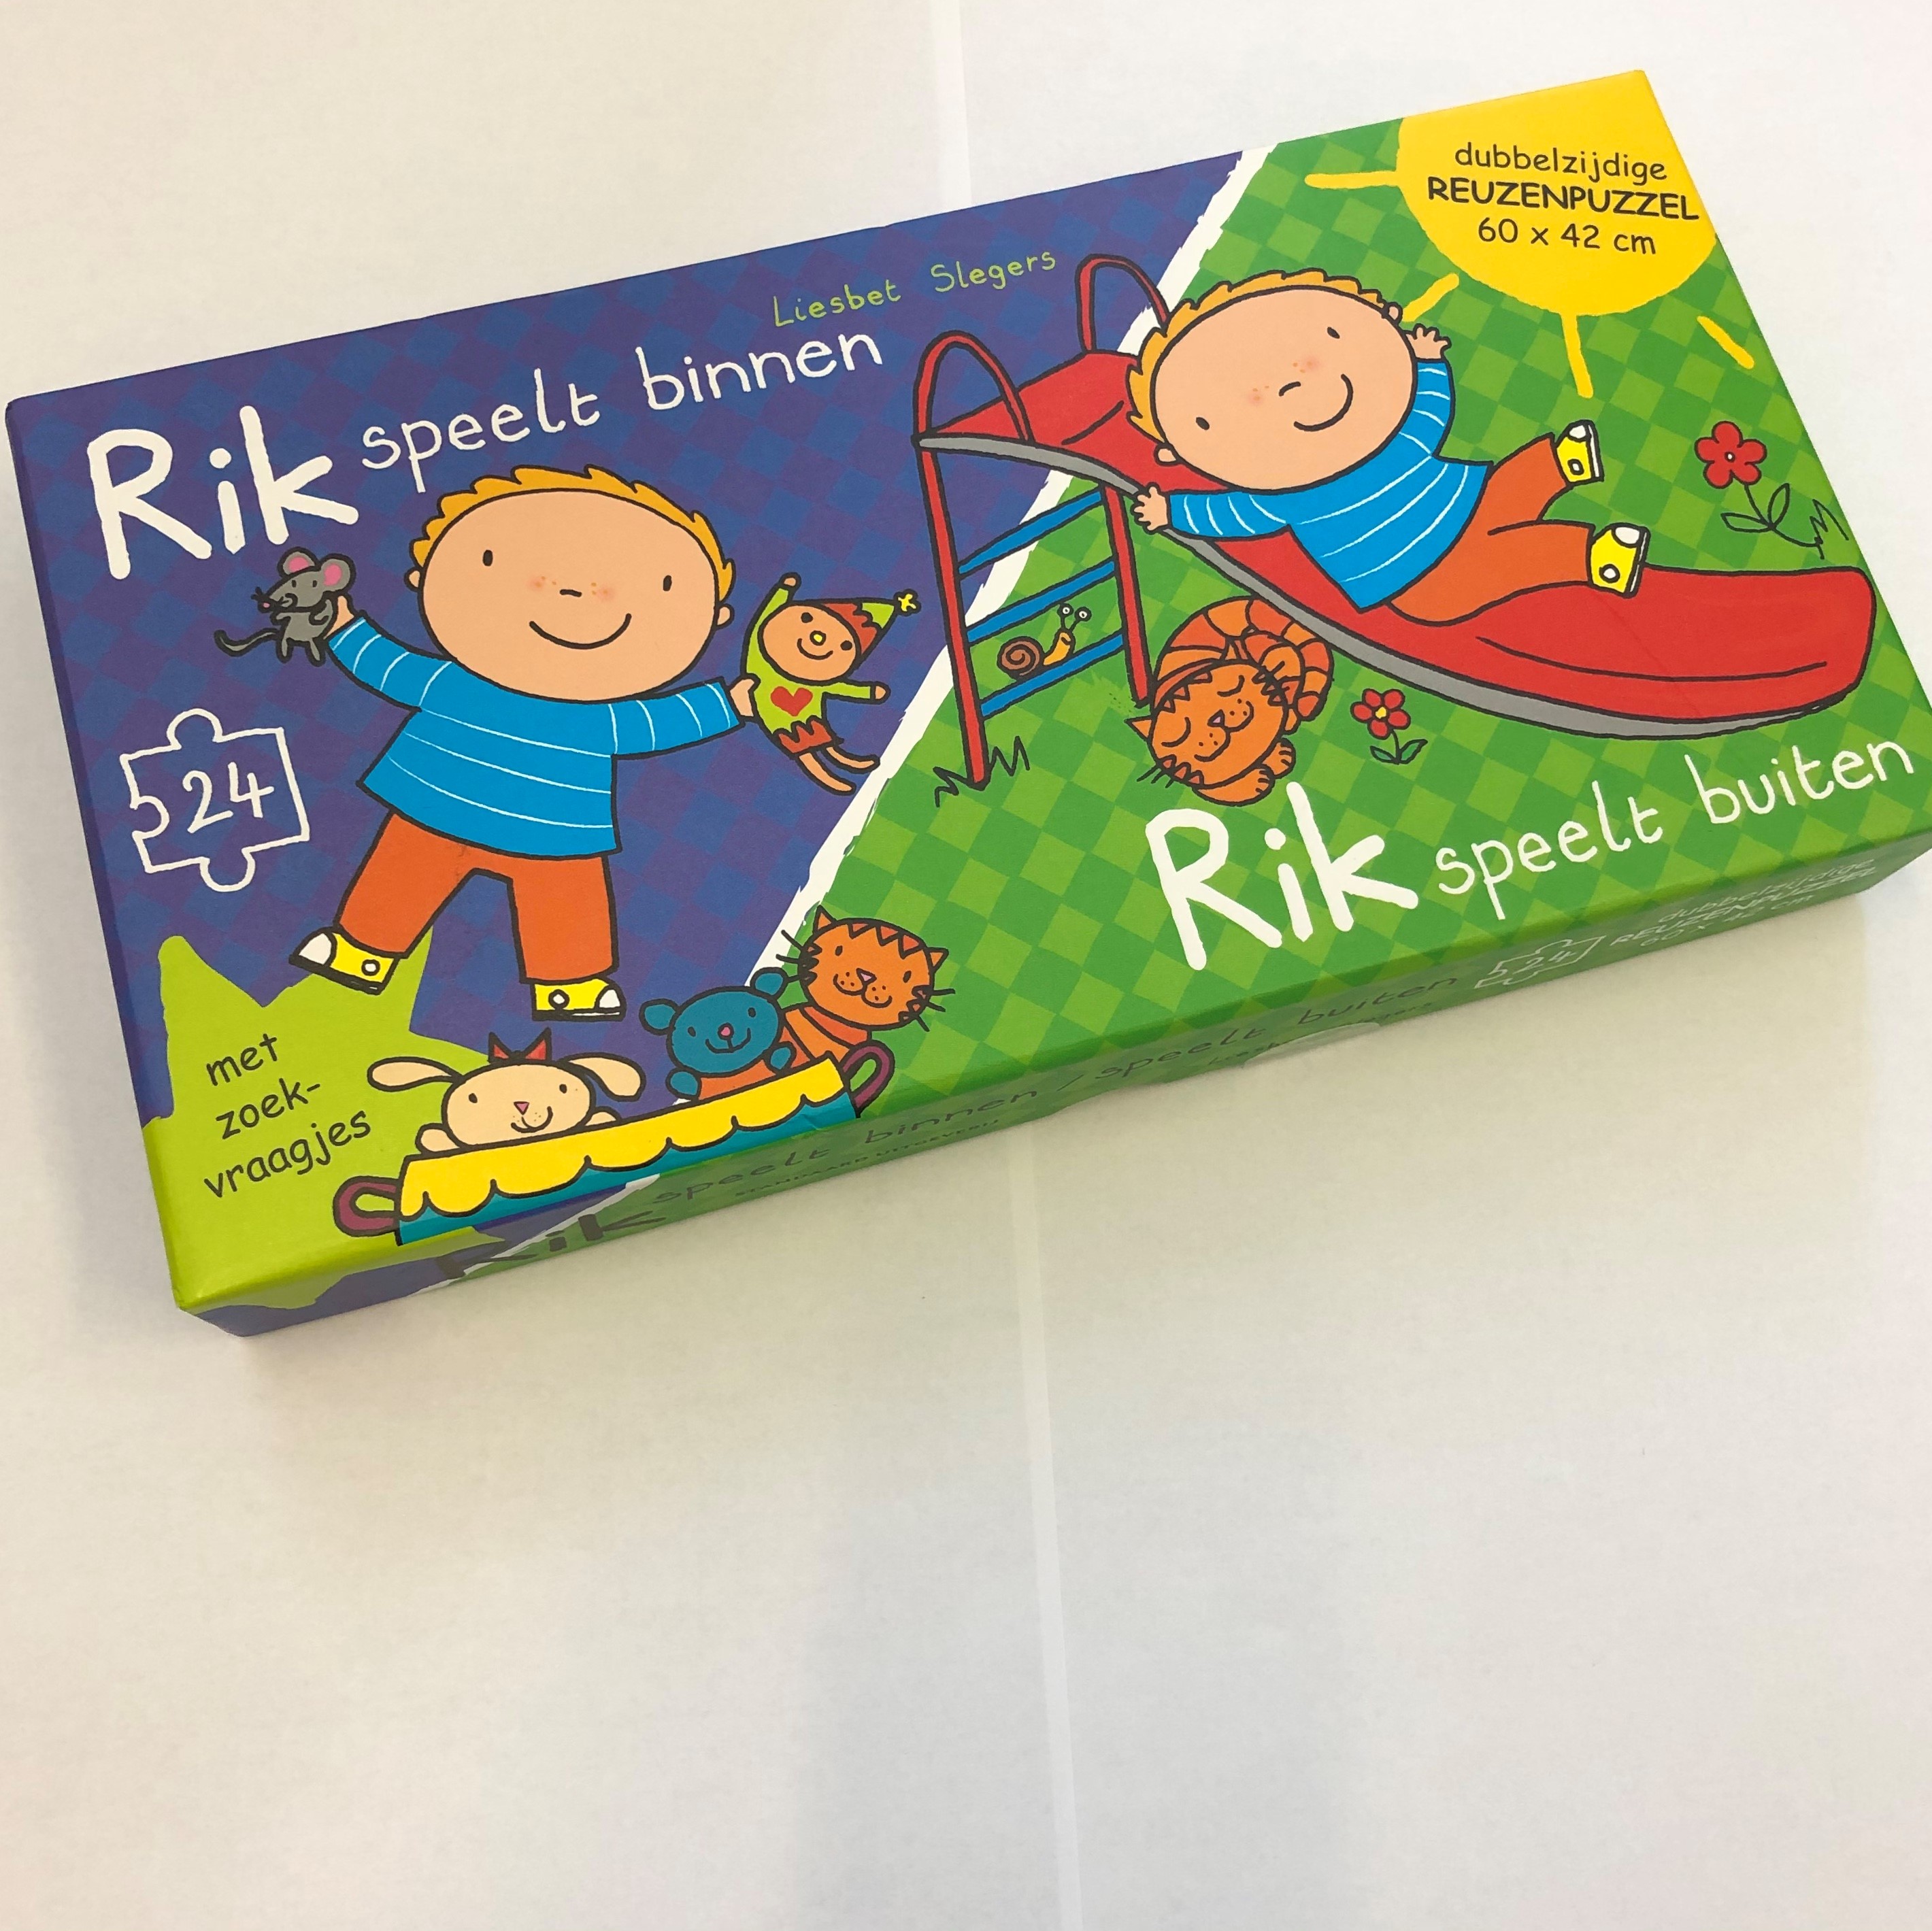 Rik puzzelNon-books High VAT